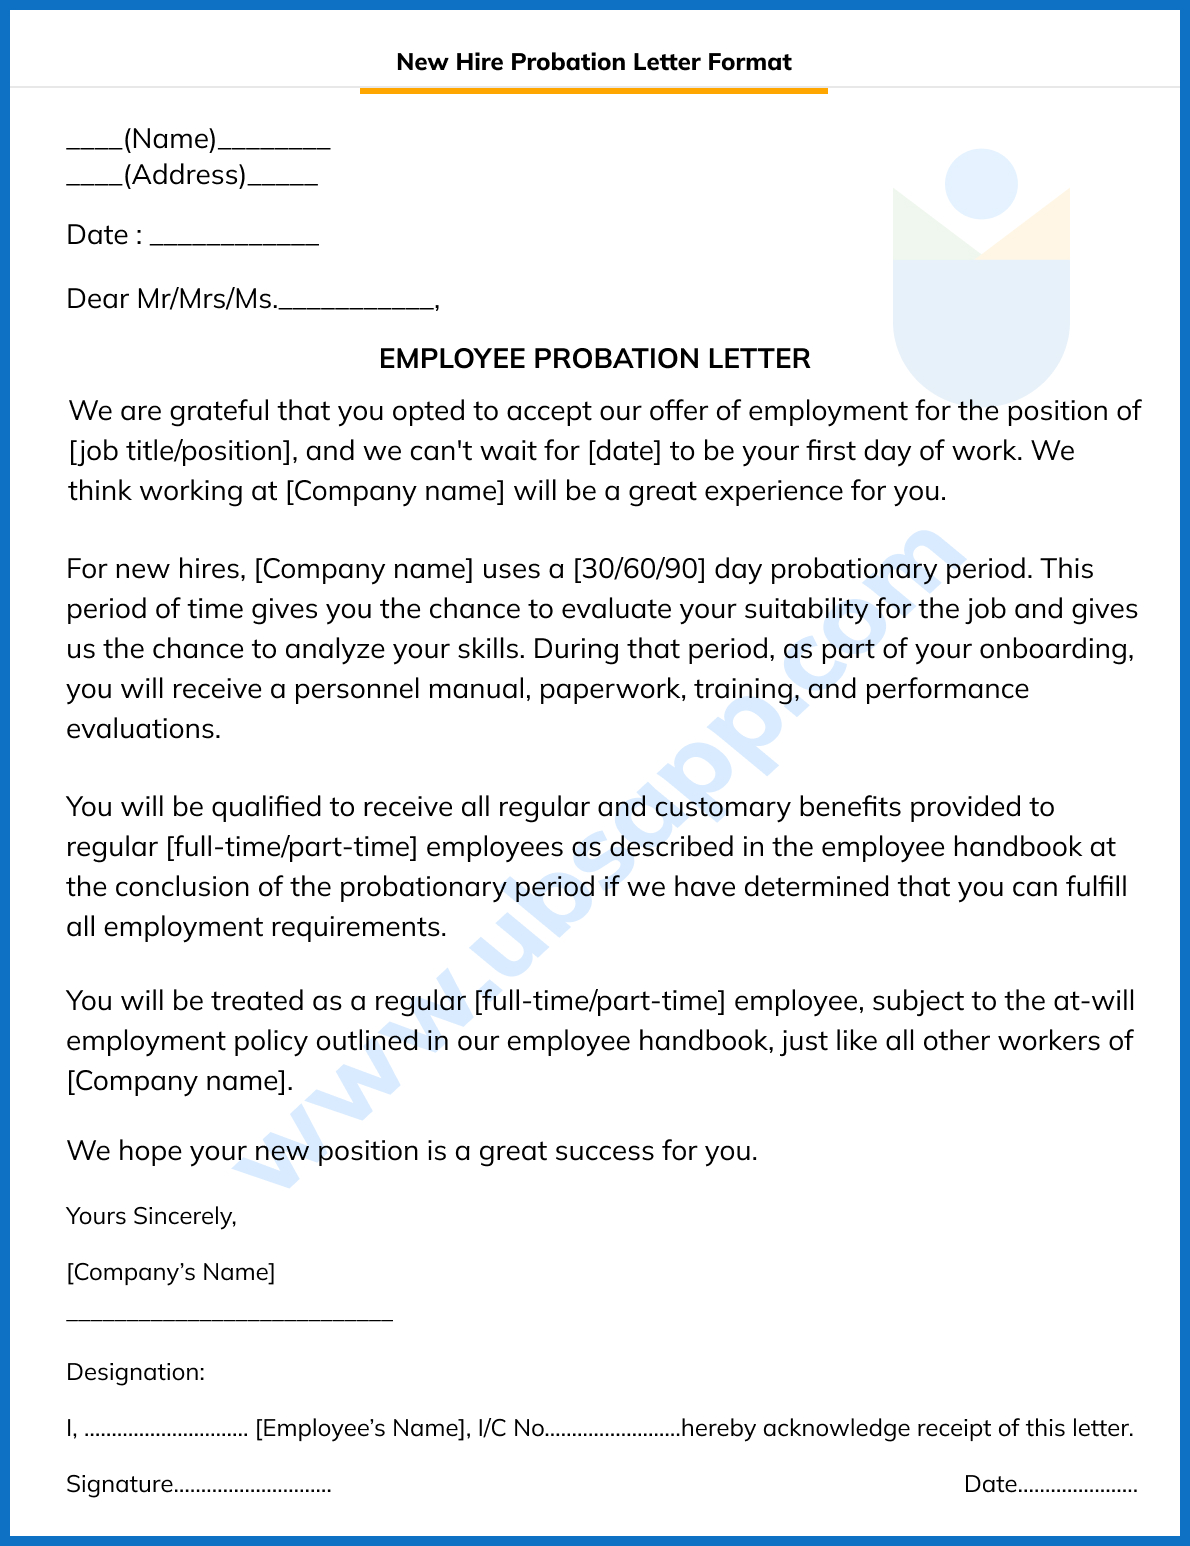 New Hire Probation Letter Format